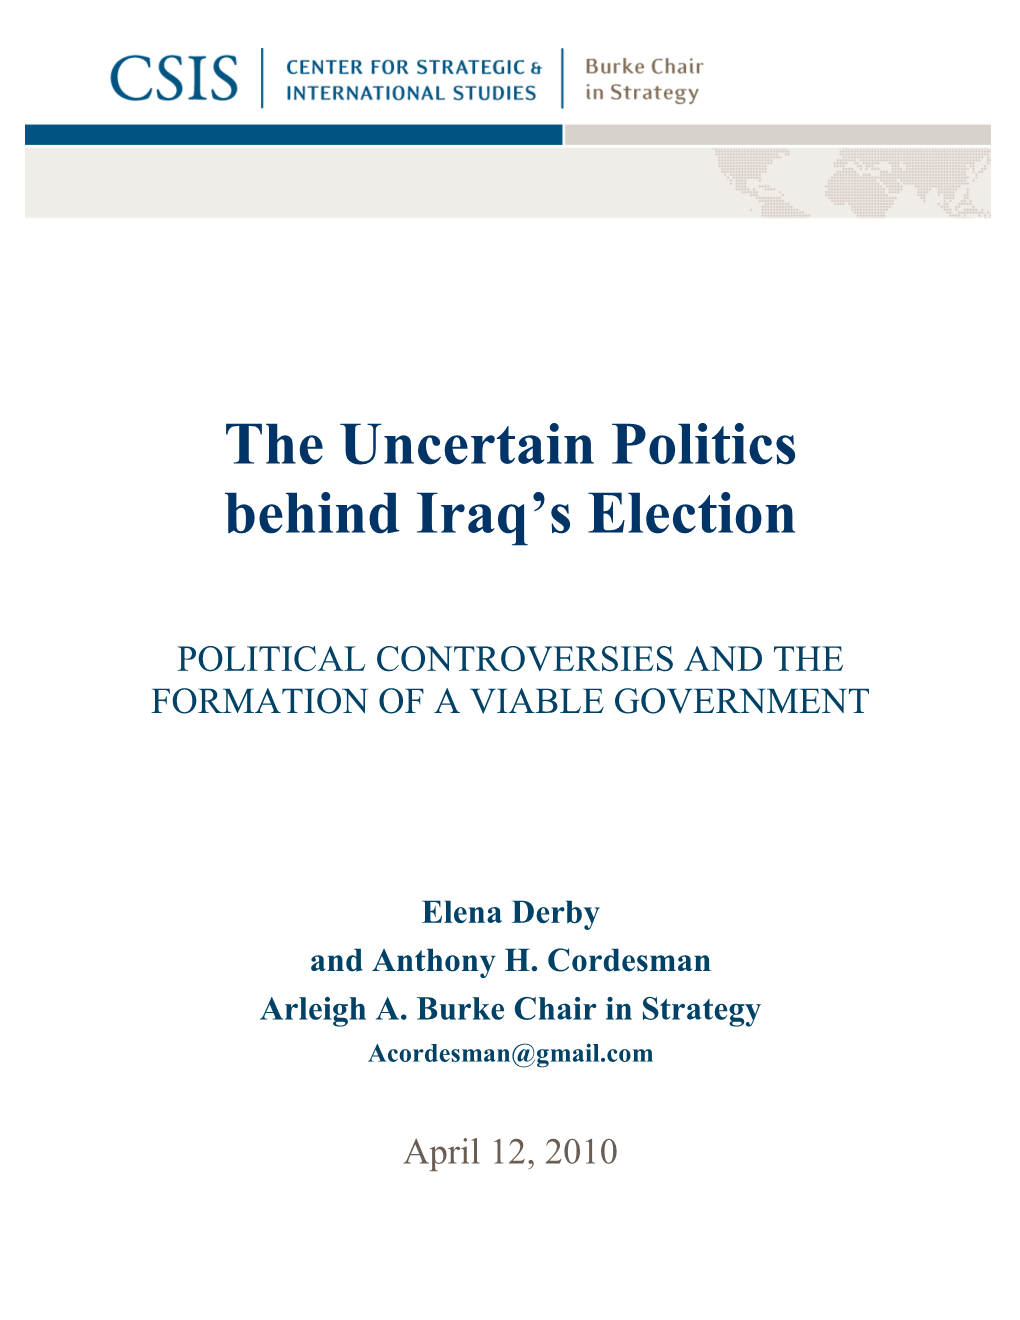 The Uncertain Politics Behind Iraq's Election